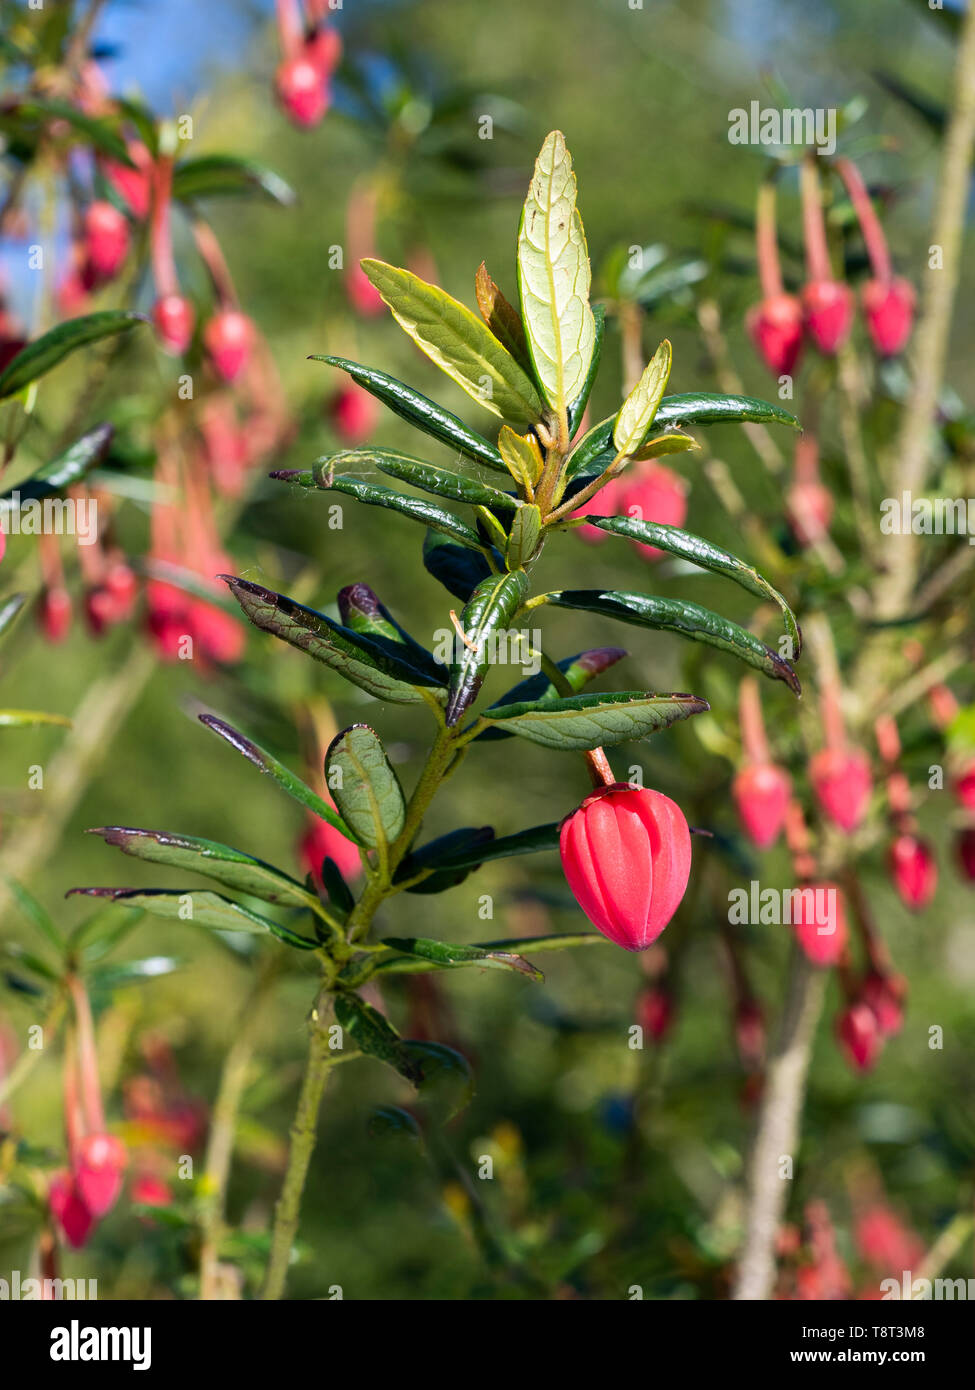 Chilean lantern tree Crinodendron hookerianum Stock Photo